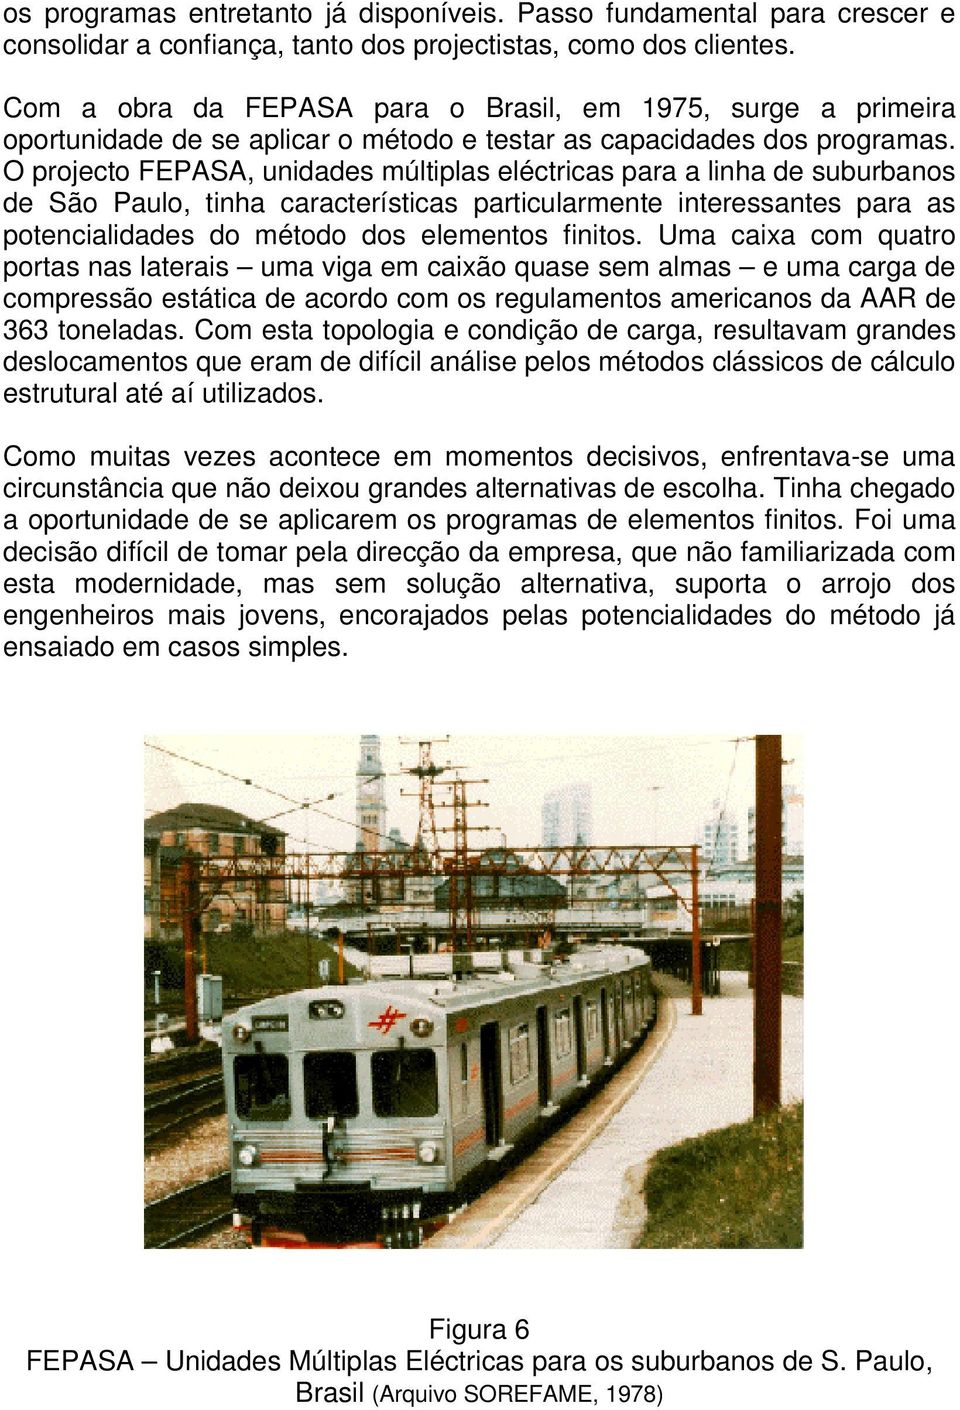 O projecto FEPASA, unidades múltiplas eléctricas para a linha de suburbanos de São Paulo, tinha características particularmente interessantes para as potencialidades do método dos elementos finitos.